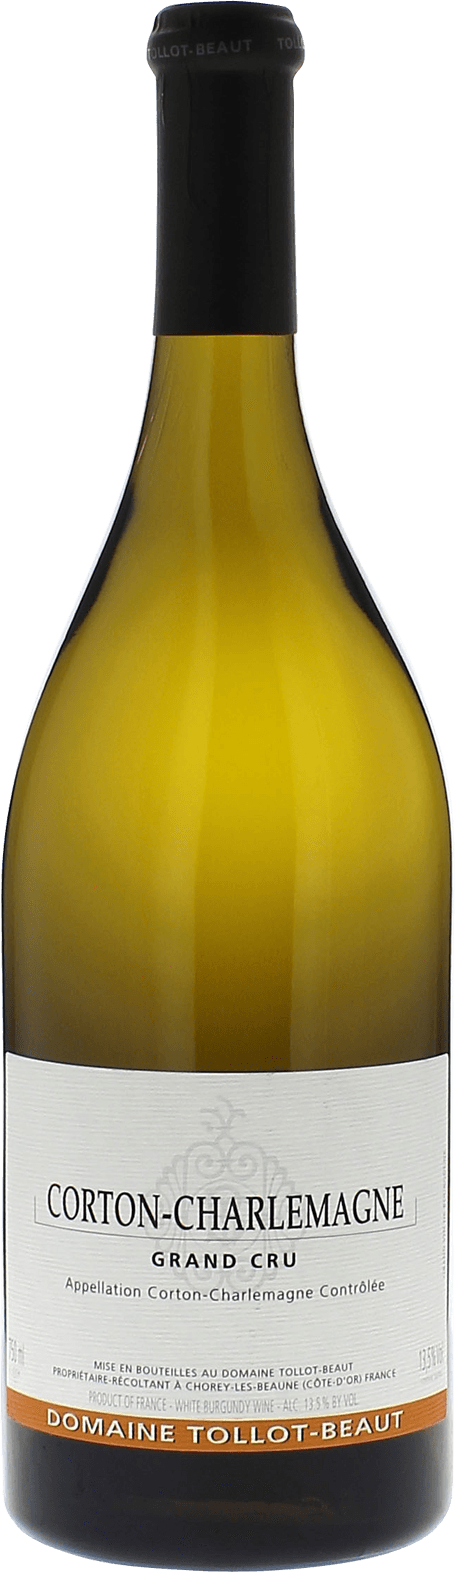 Corton charlemagne grand cru 2017 Domaine TOLLOT BEAUT, Bourgogne blanc